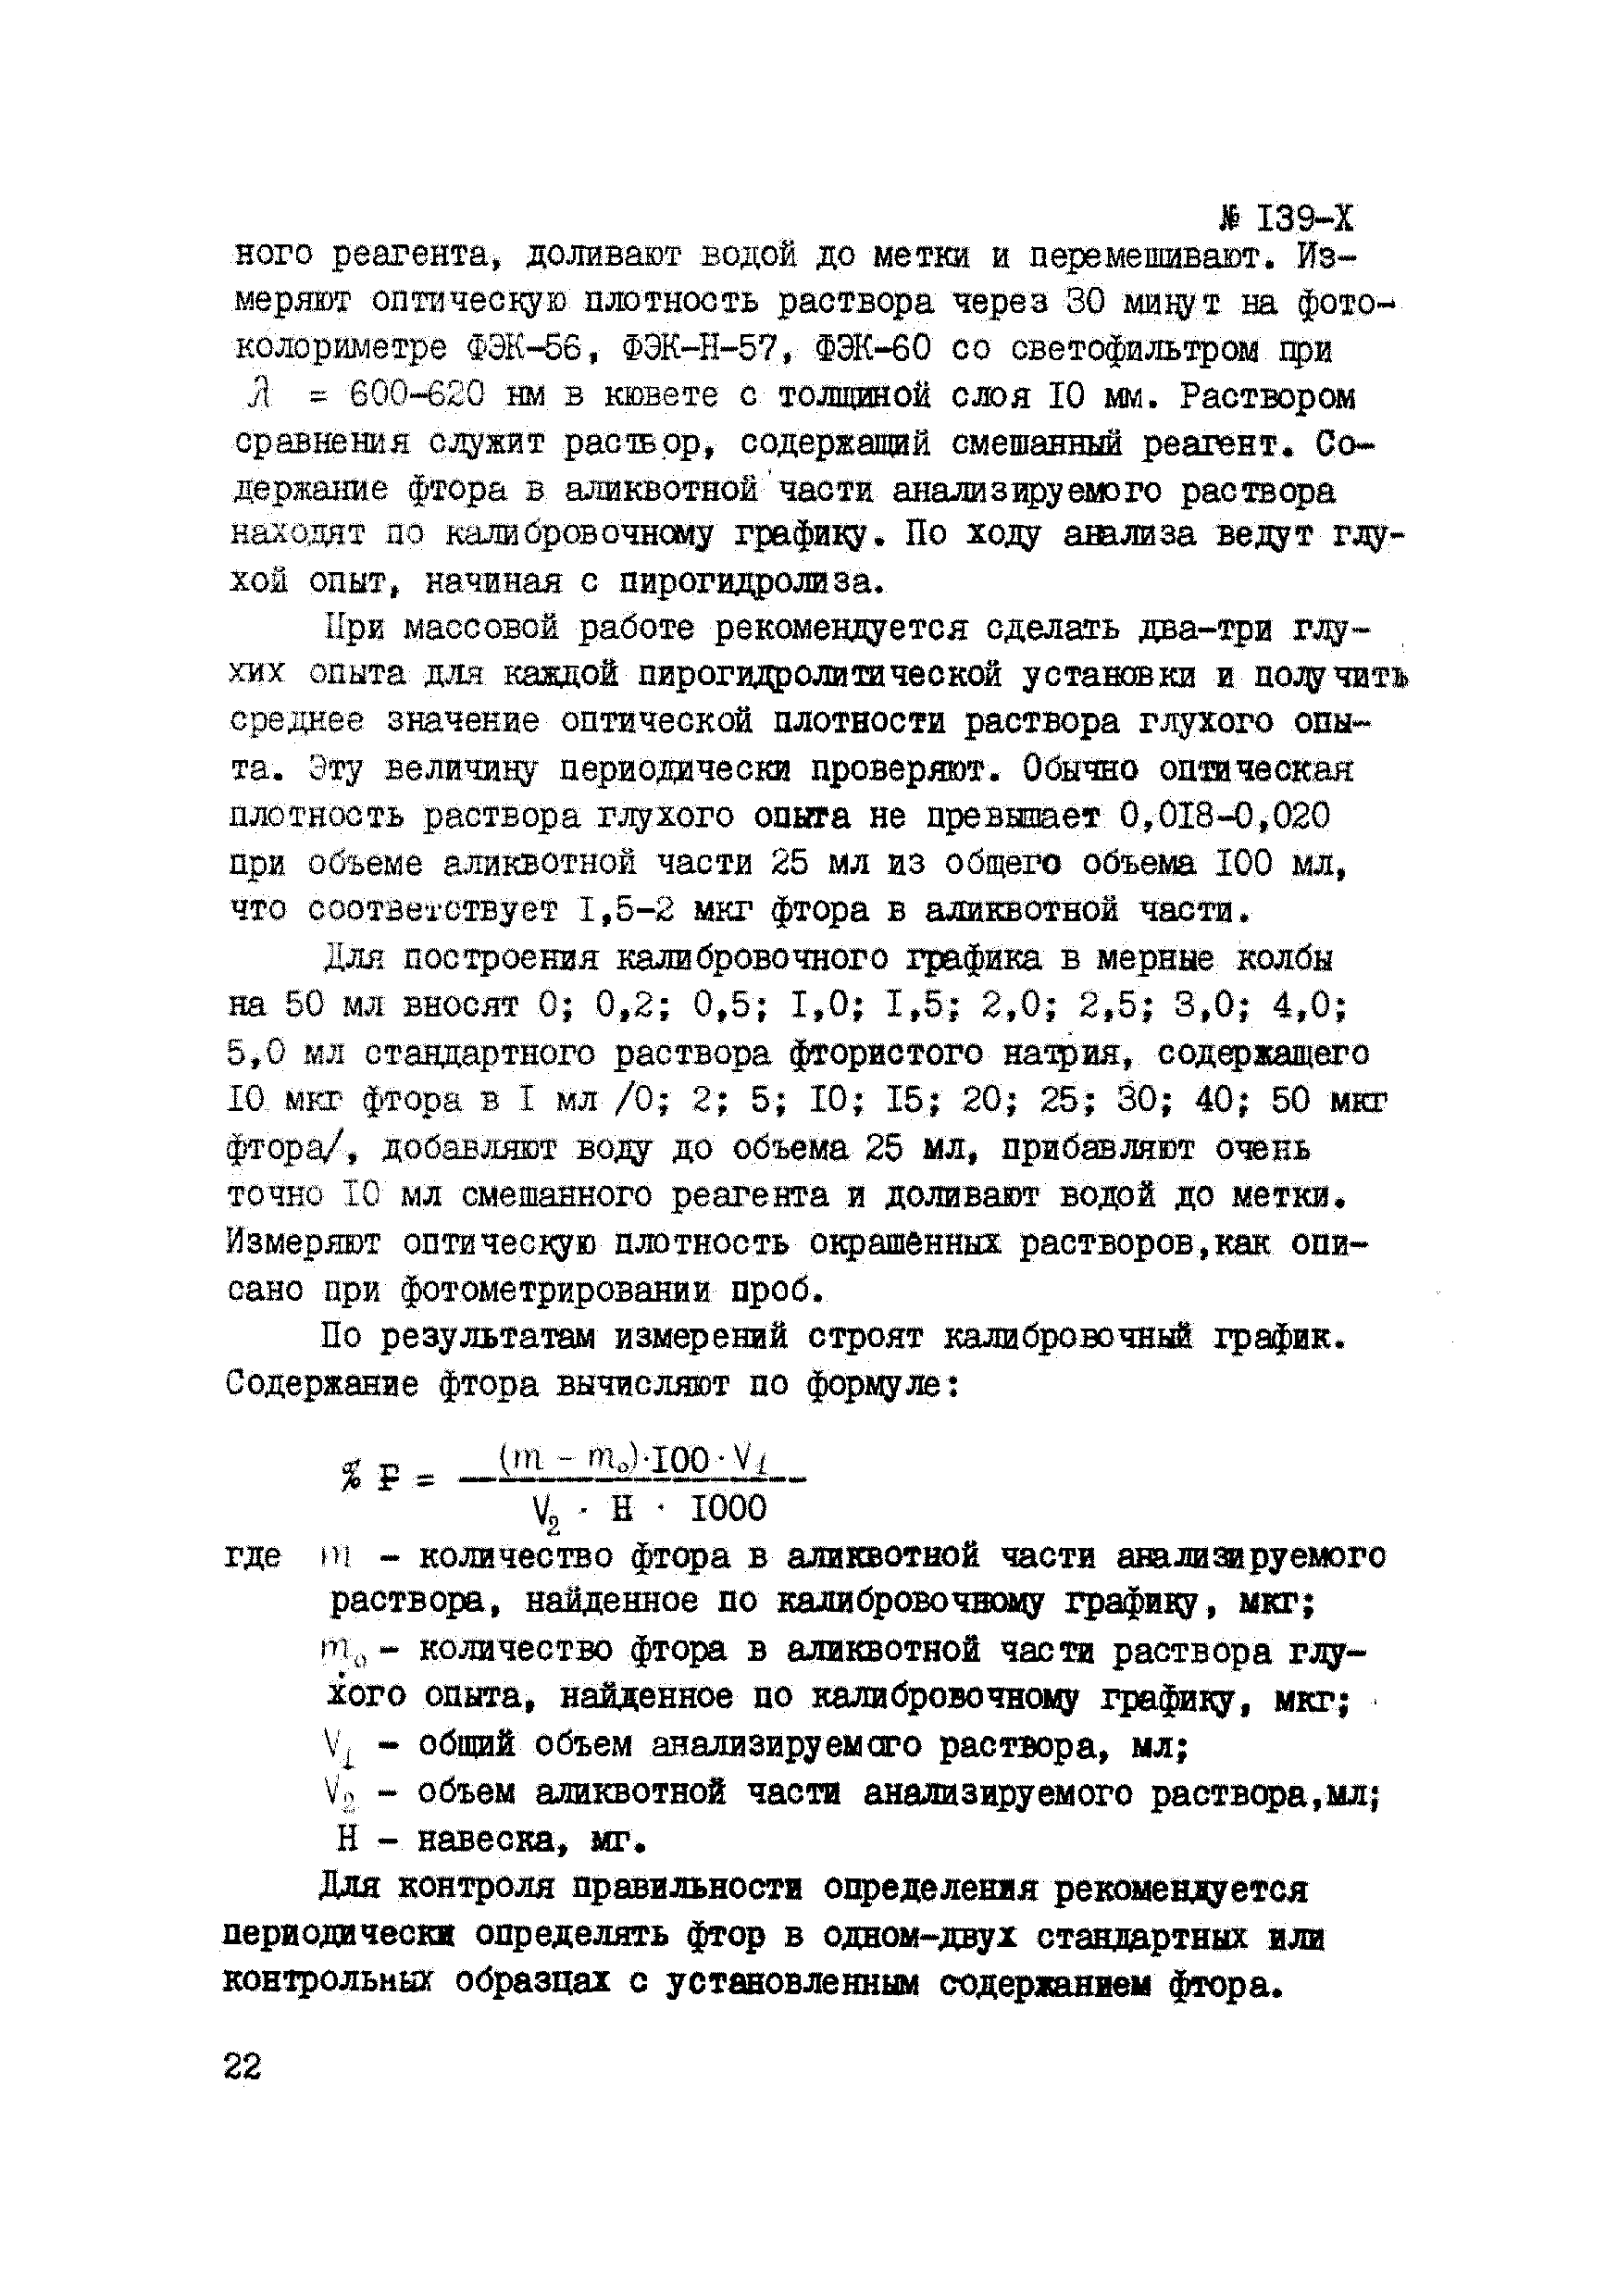 Инструкция НСАМ 139-Х